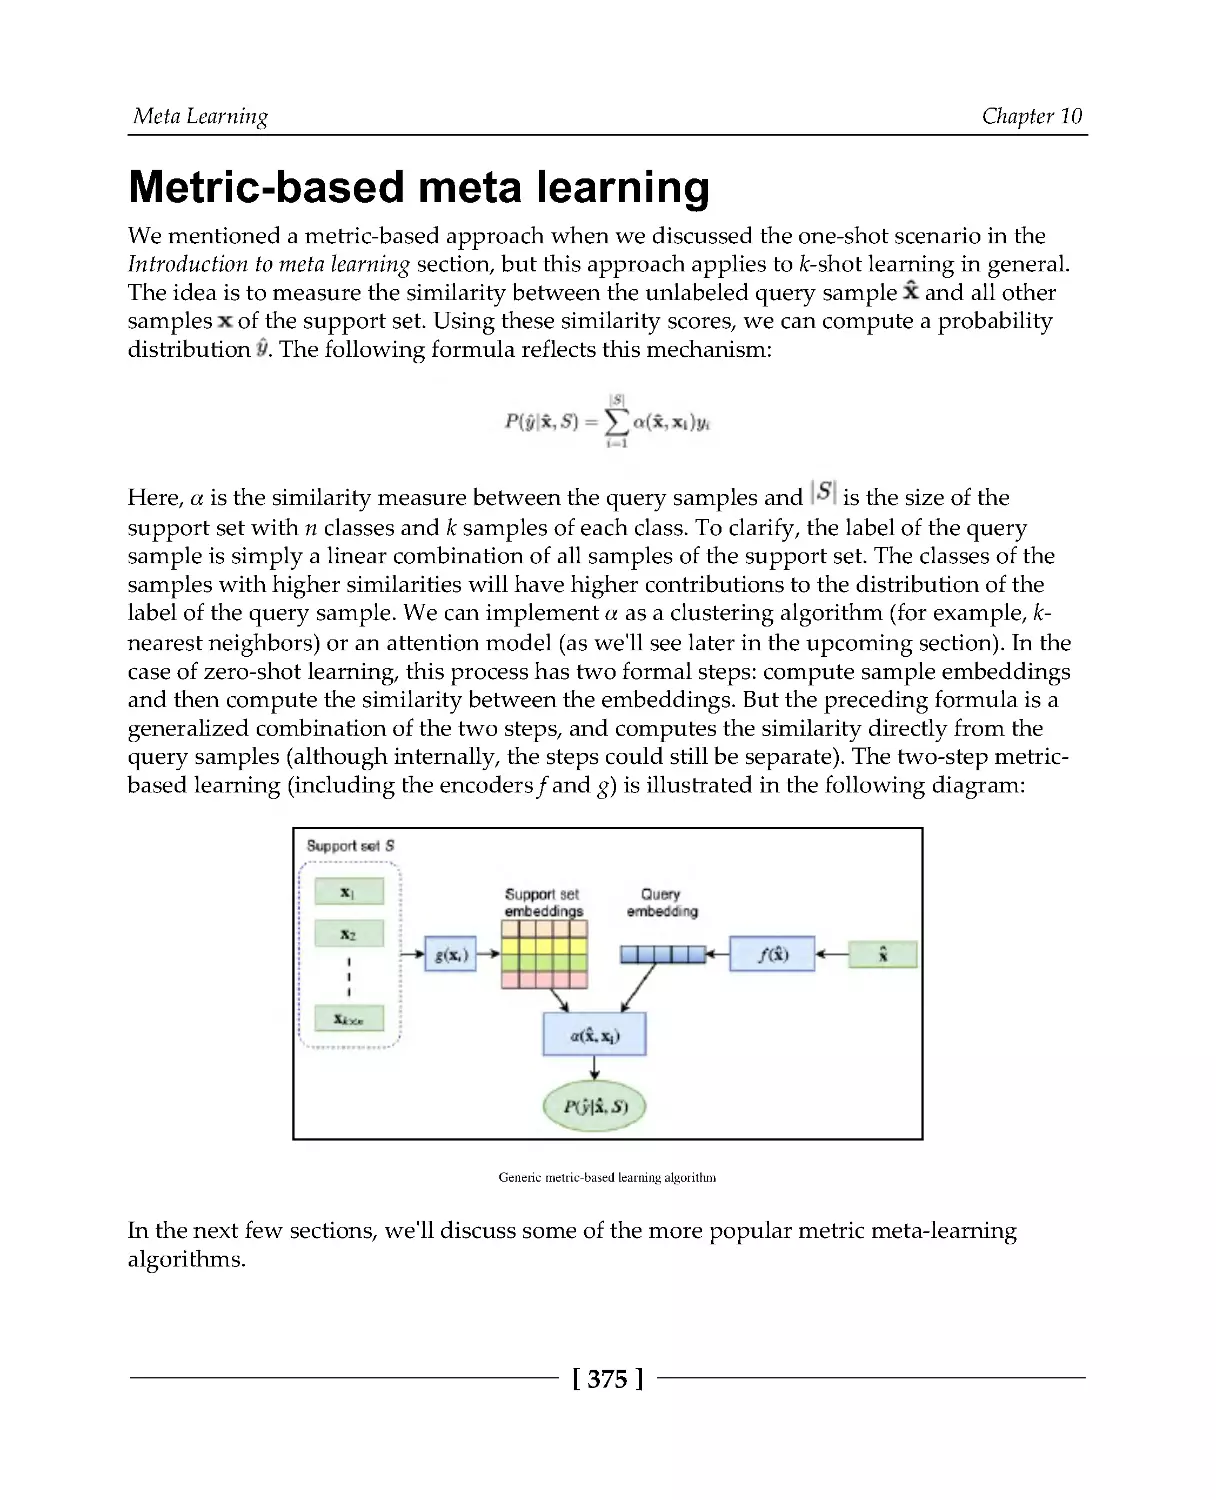 Metric-based meta learning